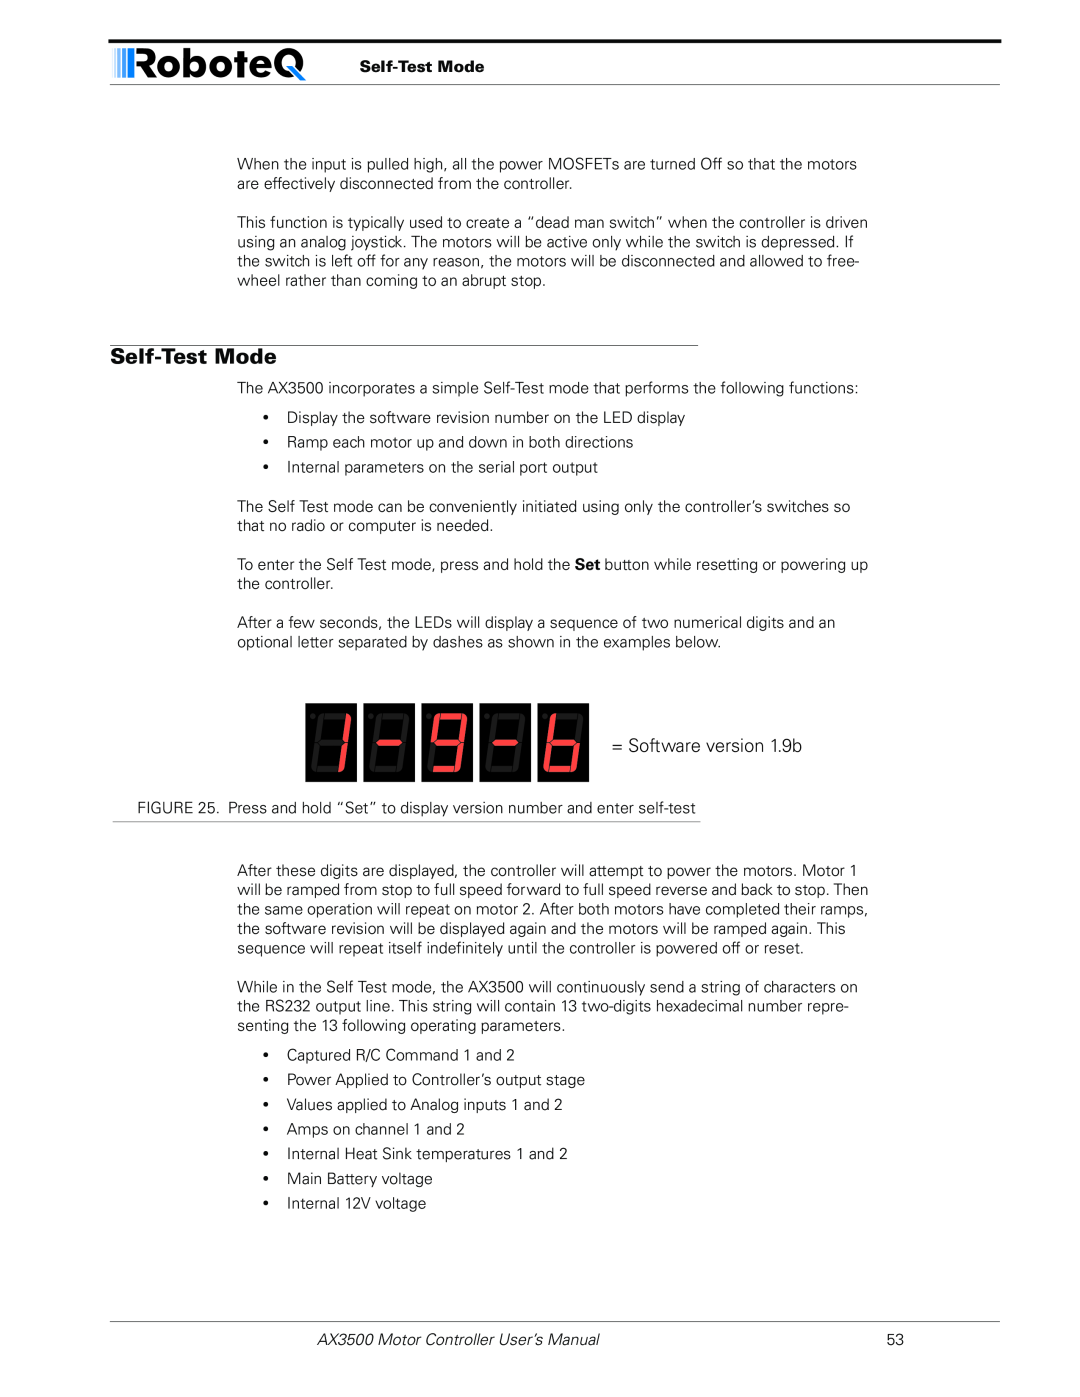 RoboteQ user manual Self-Test Mode, = Software version 1.9b, AX3500 Motor Controller User’s Manual 